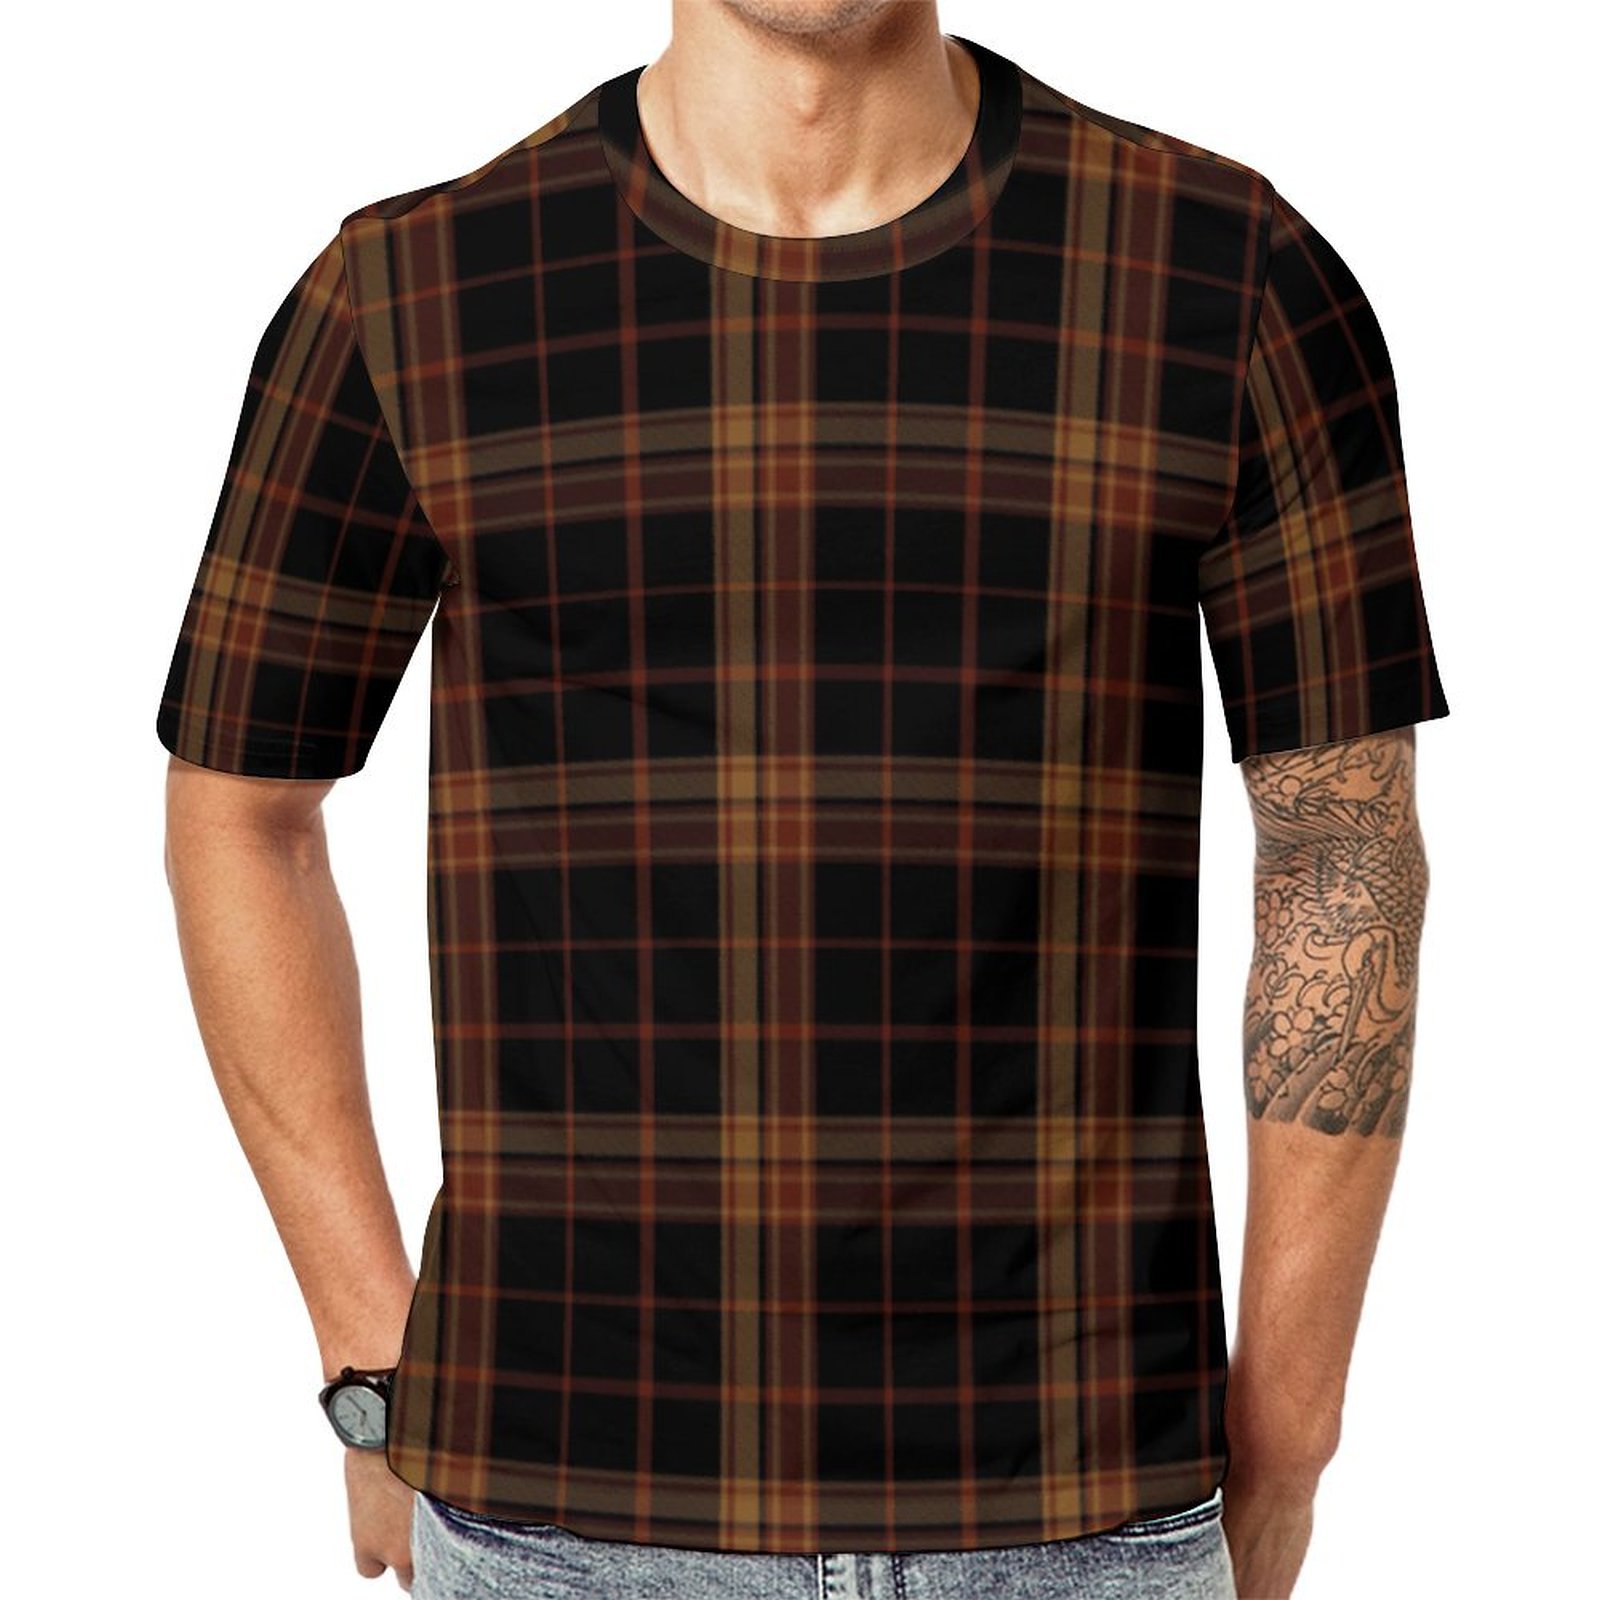 Black Forest Scottish Clan Tartan Plaid Short Sleeve Print Unisex Tshirt Summer Casual Tees for Men and Women Coolcoshirts